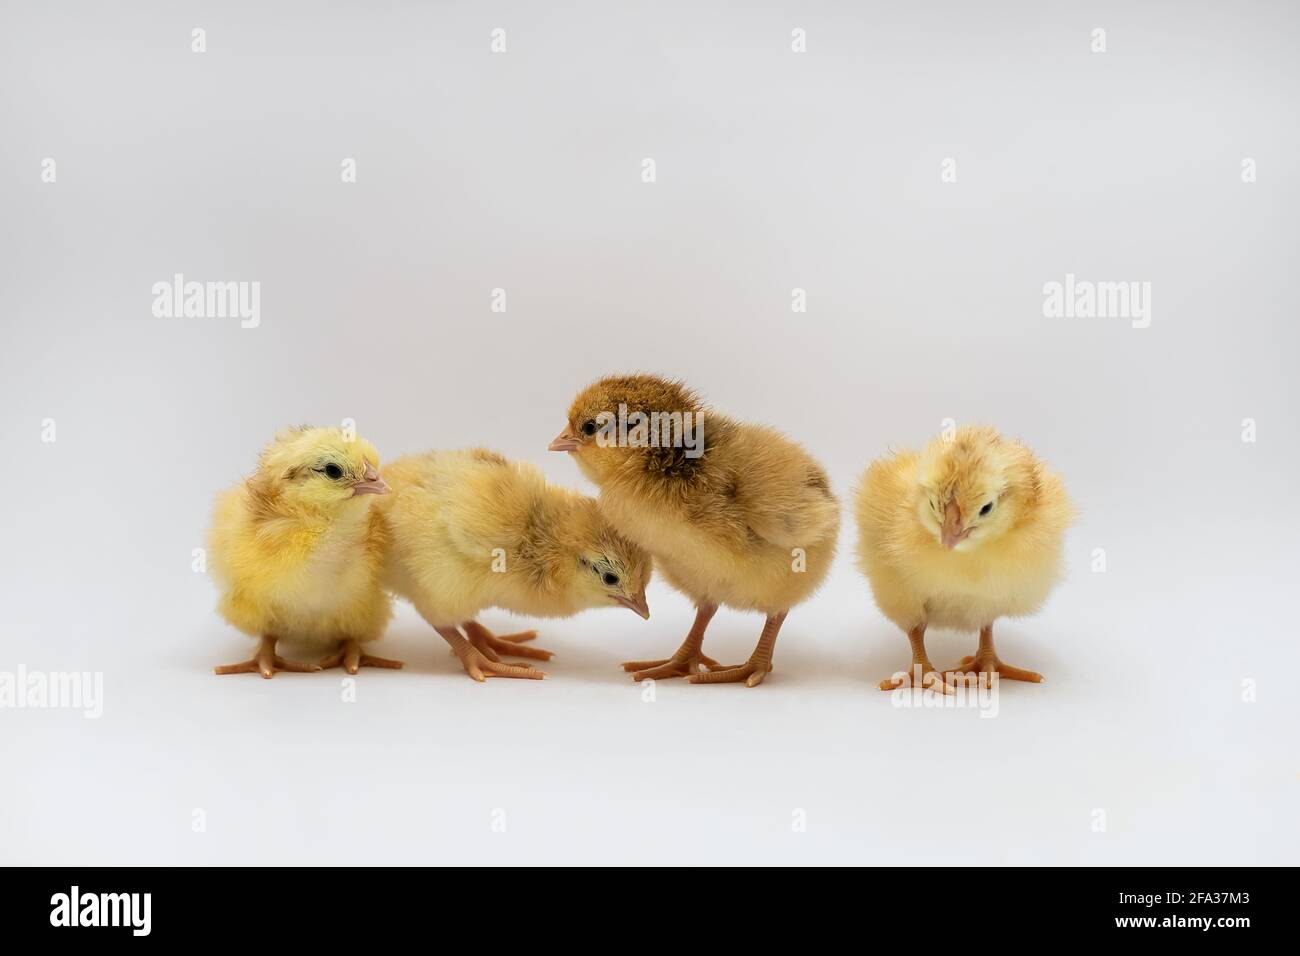 Newborn white and brown chicken eating, resting Stock Photo